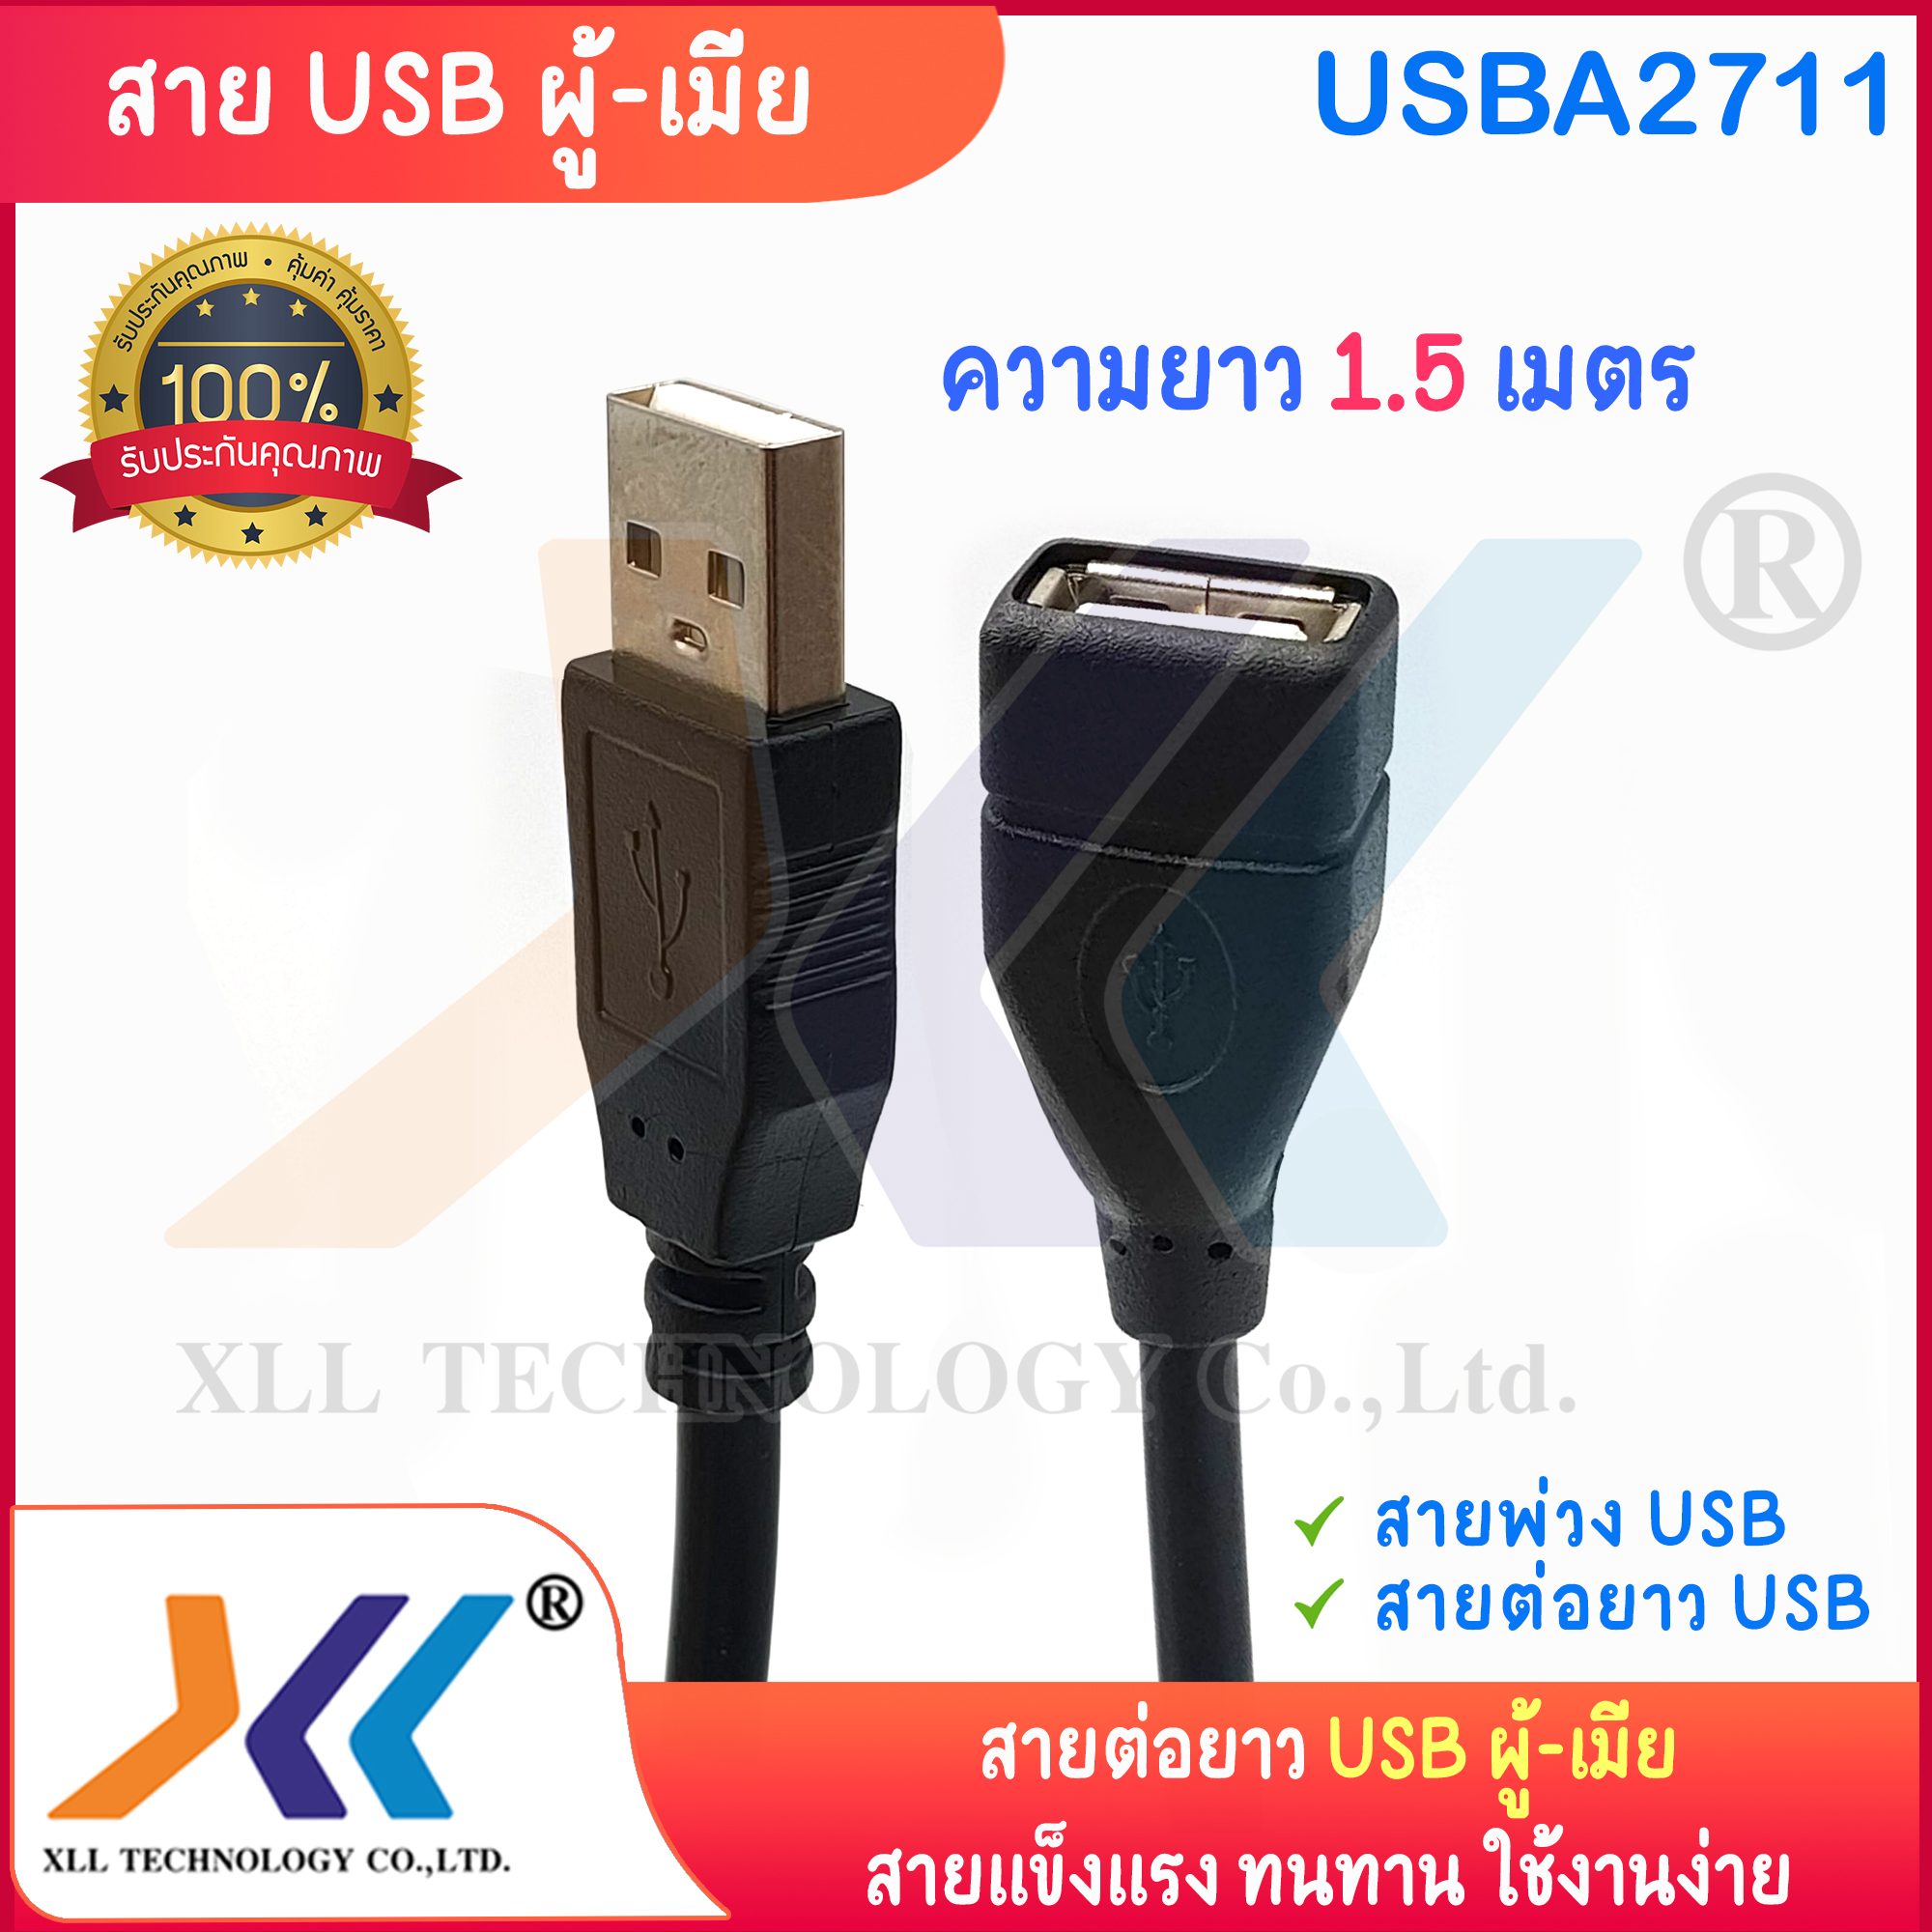 XLL DATA Cable USB 2.0 ผู้-เมีย ความยาว 1.5-10 เมตร